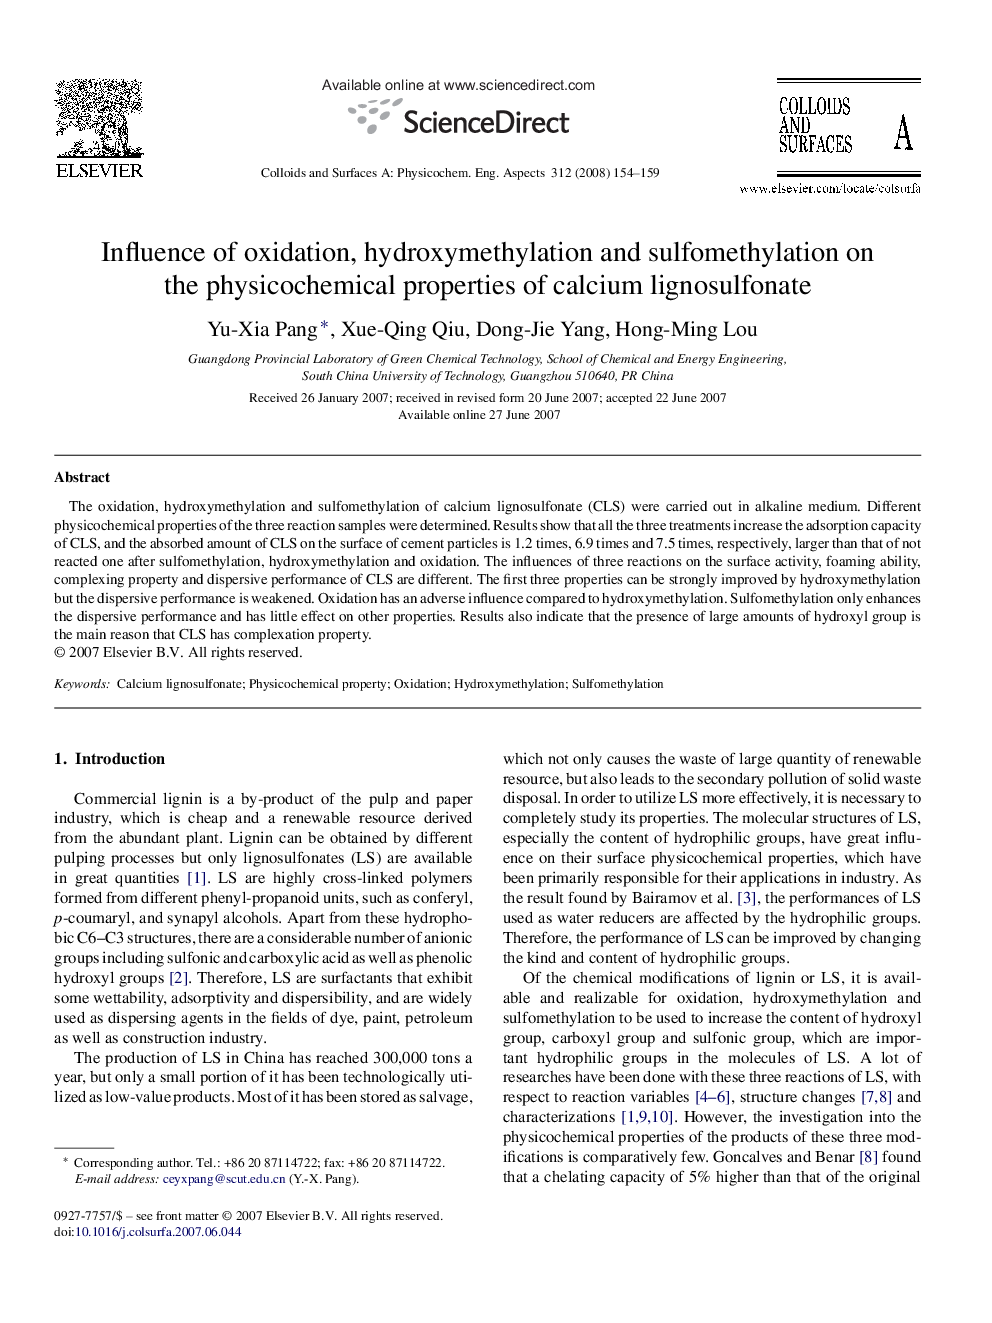 Influence of oxidation, hydroxymethylation and sulfomethylation on the physicochemical properties of calcium lignosulfonate